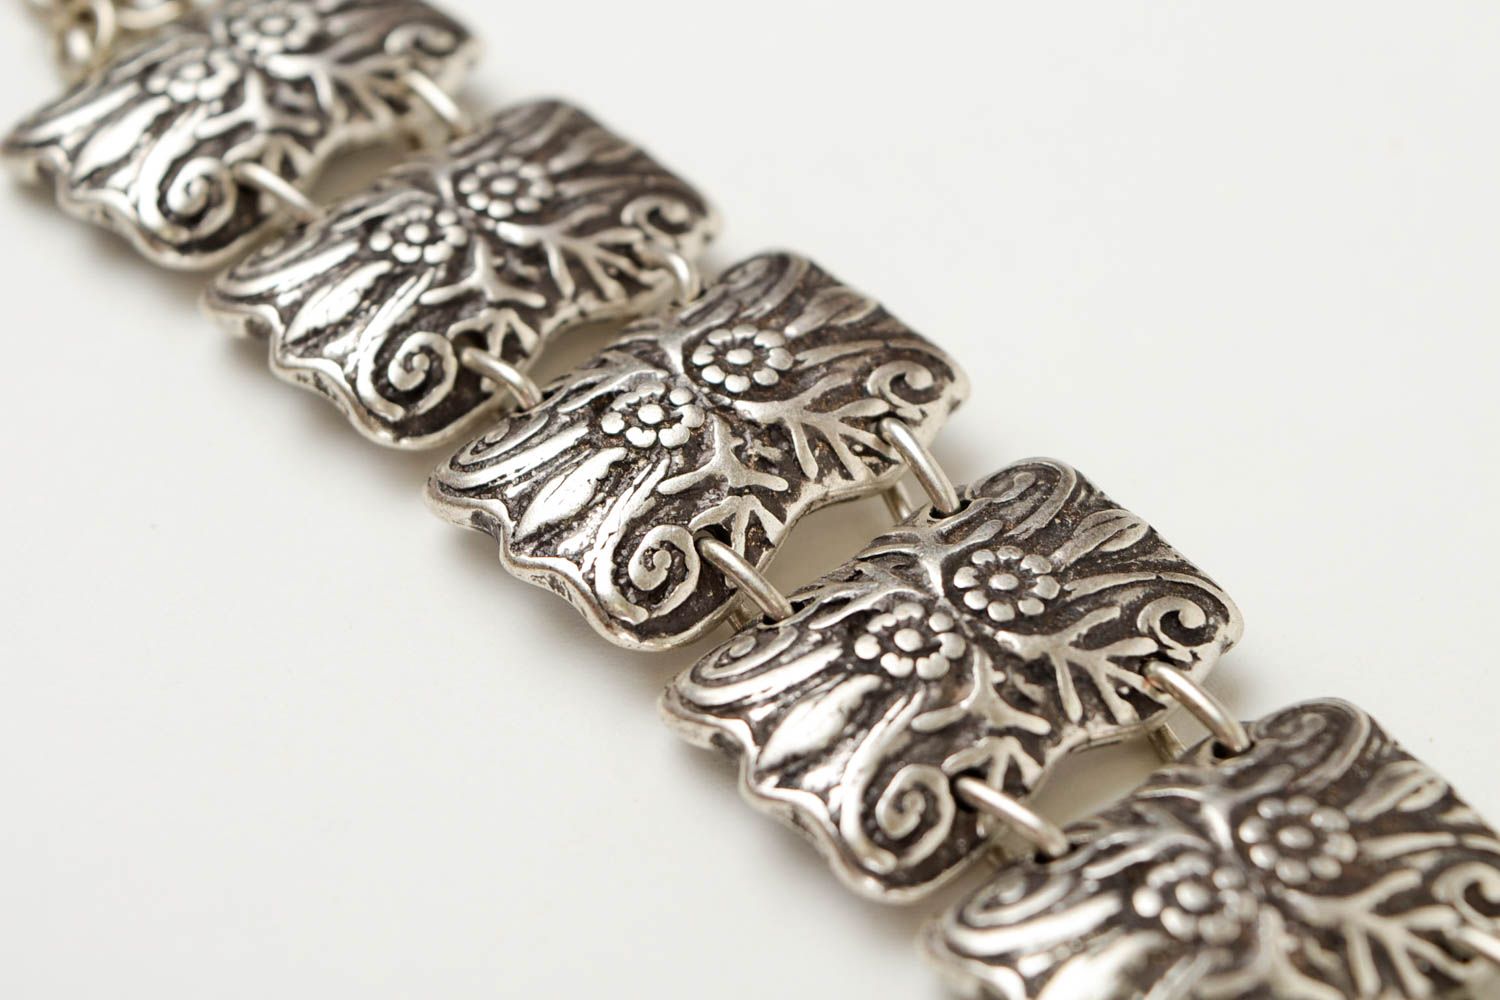 Stylish handmade metal bracelet metal craft ideas cuff bracelet designs photo 3